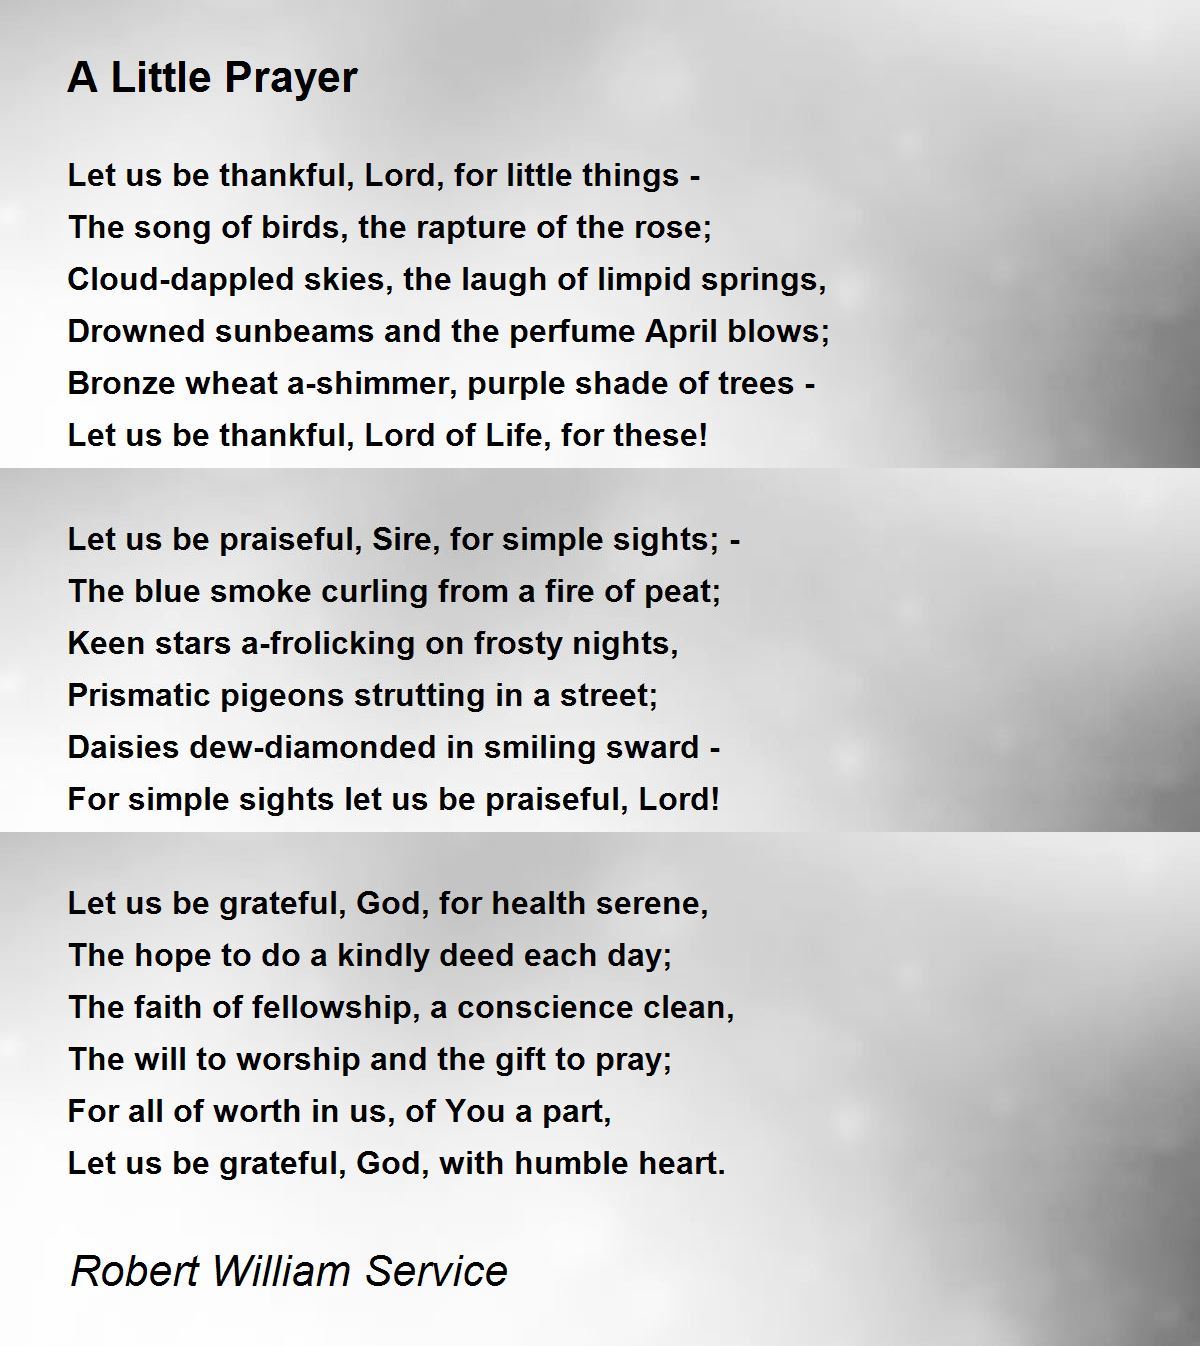 A Little Prayer Poem by Robert William Service - Poem Hunter